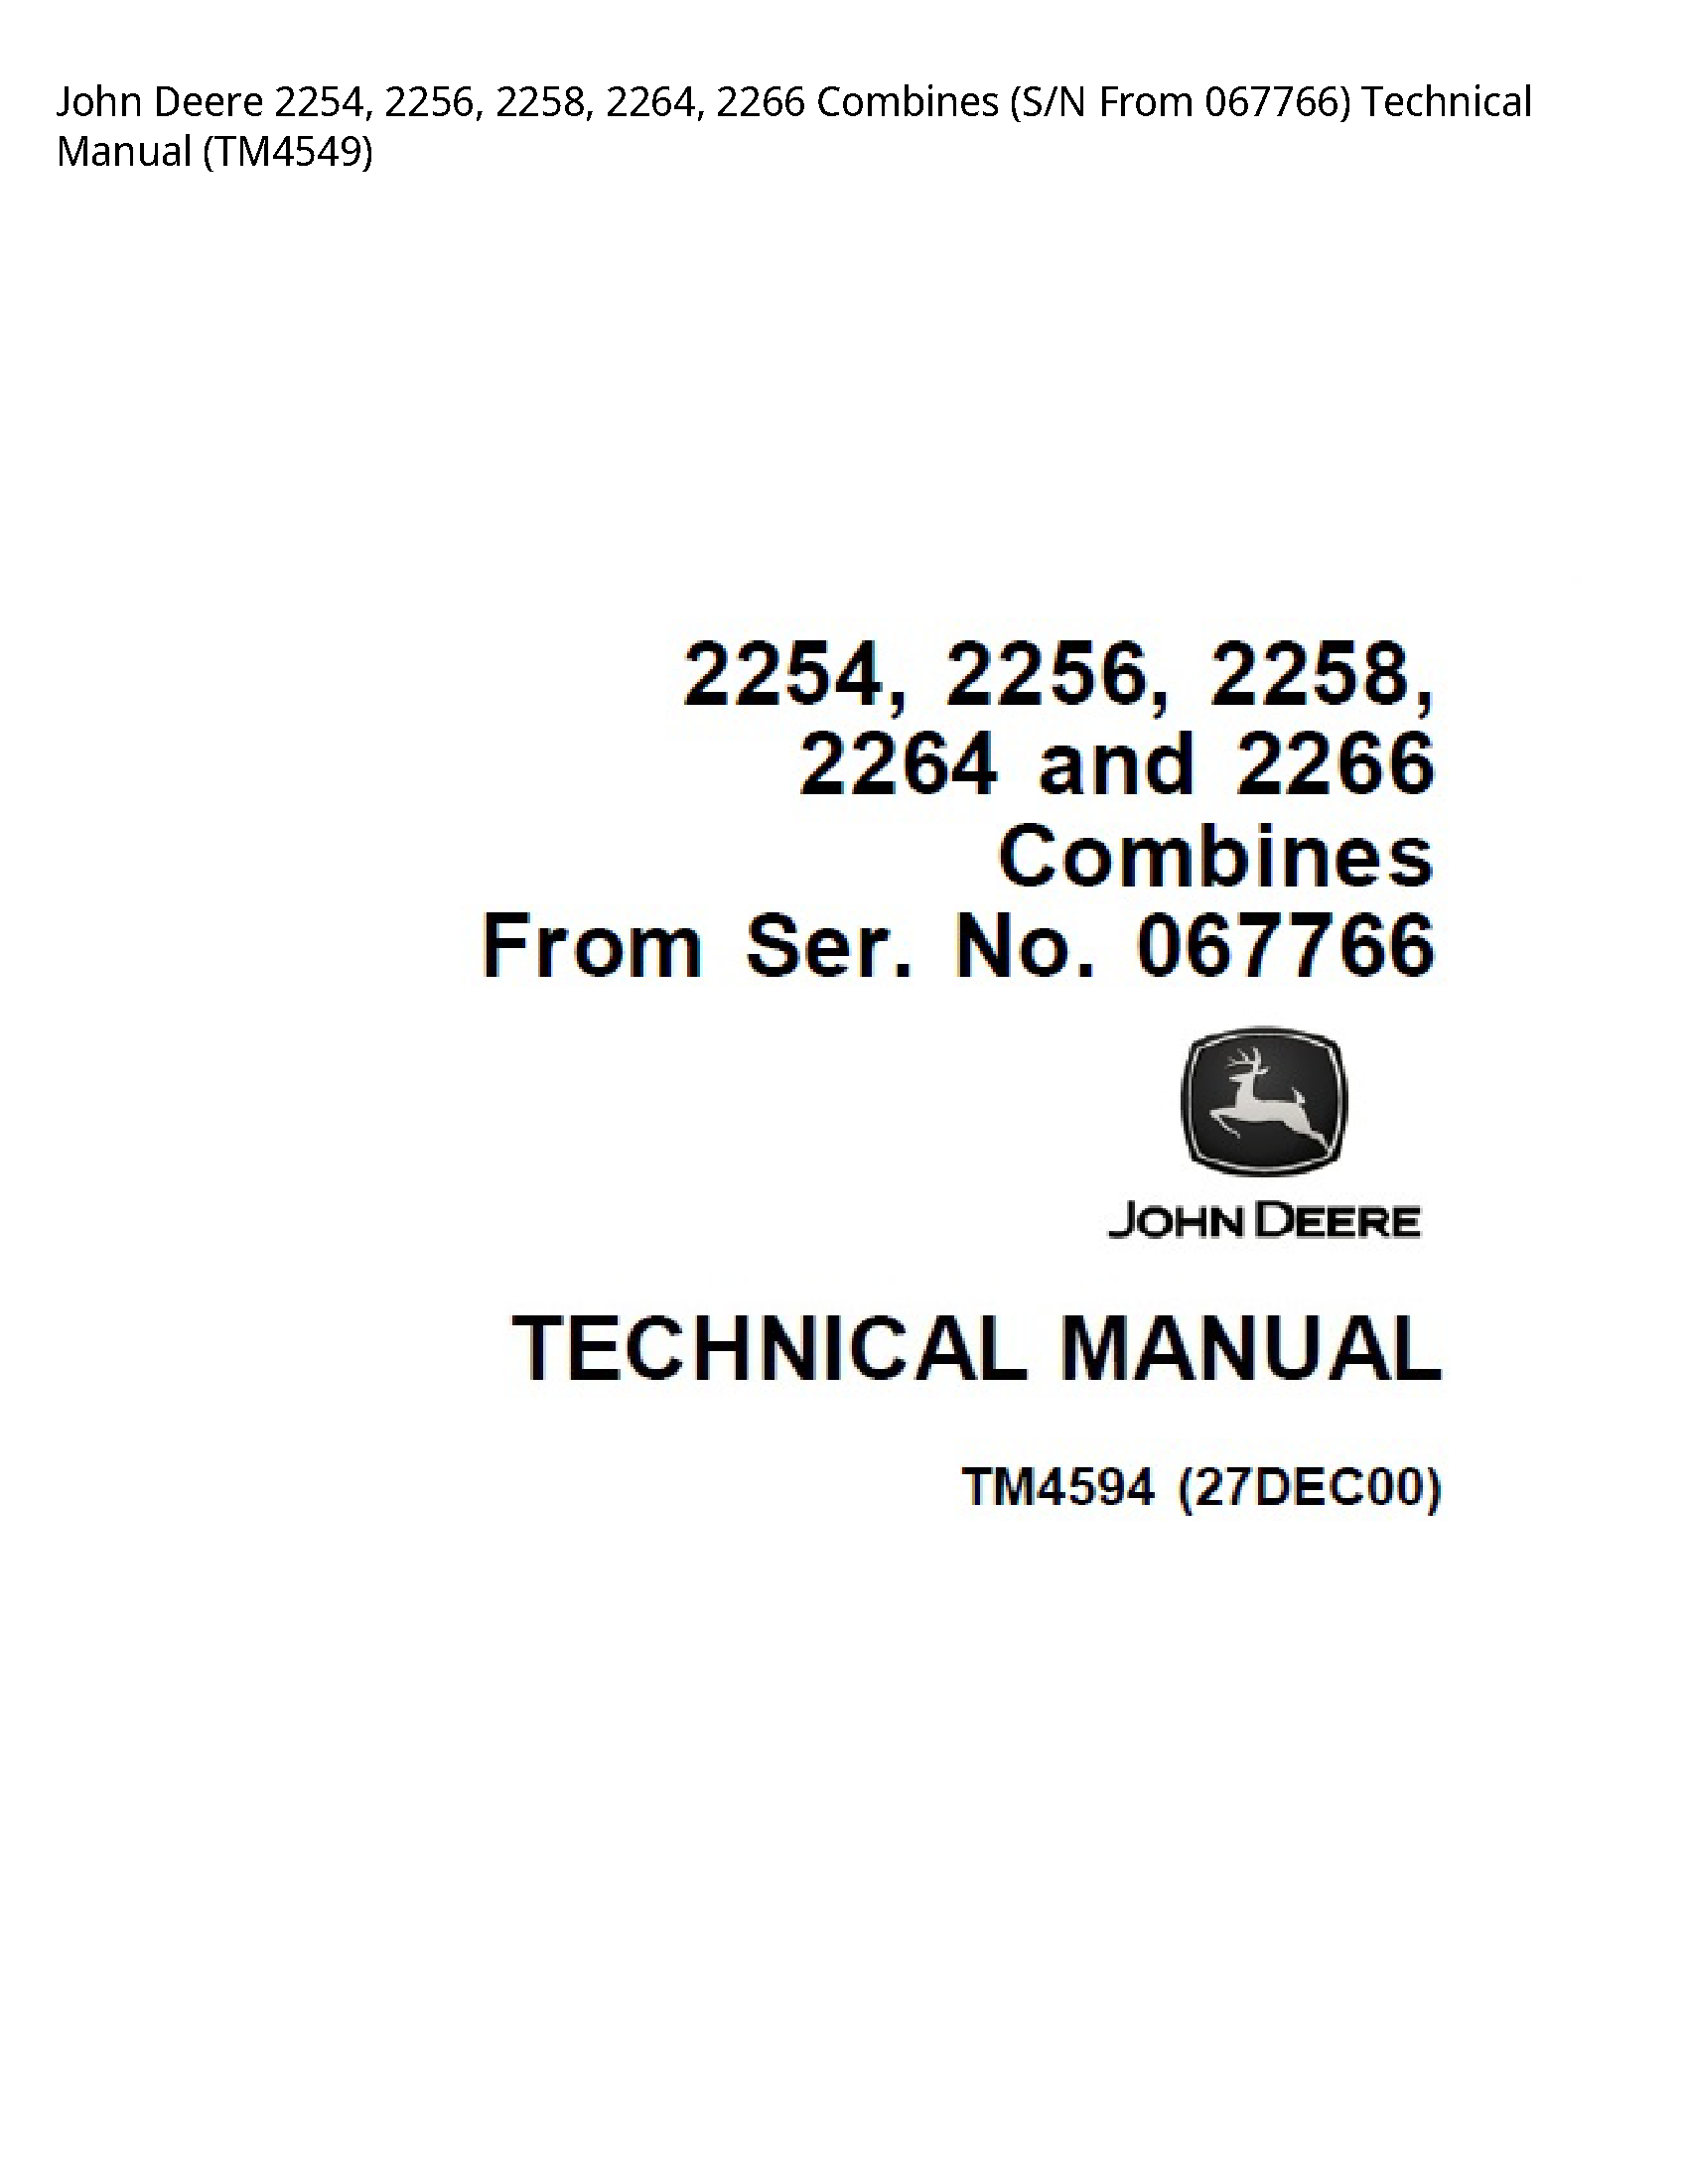 John Deere 2254 Combines S/N From Technical manual